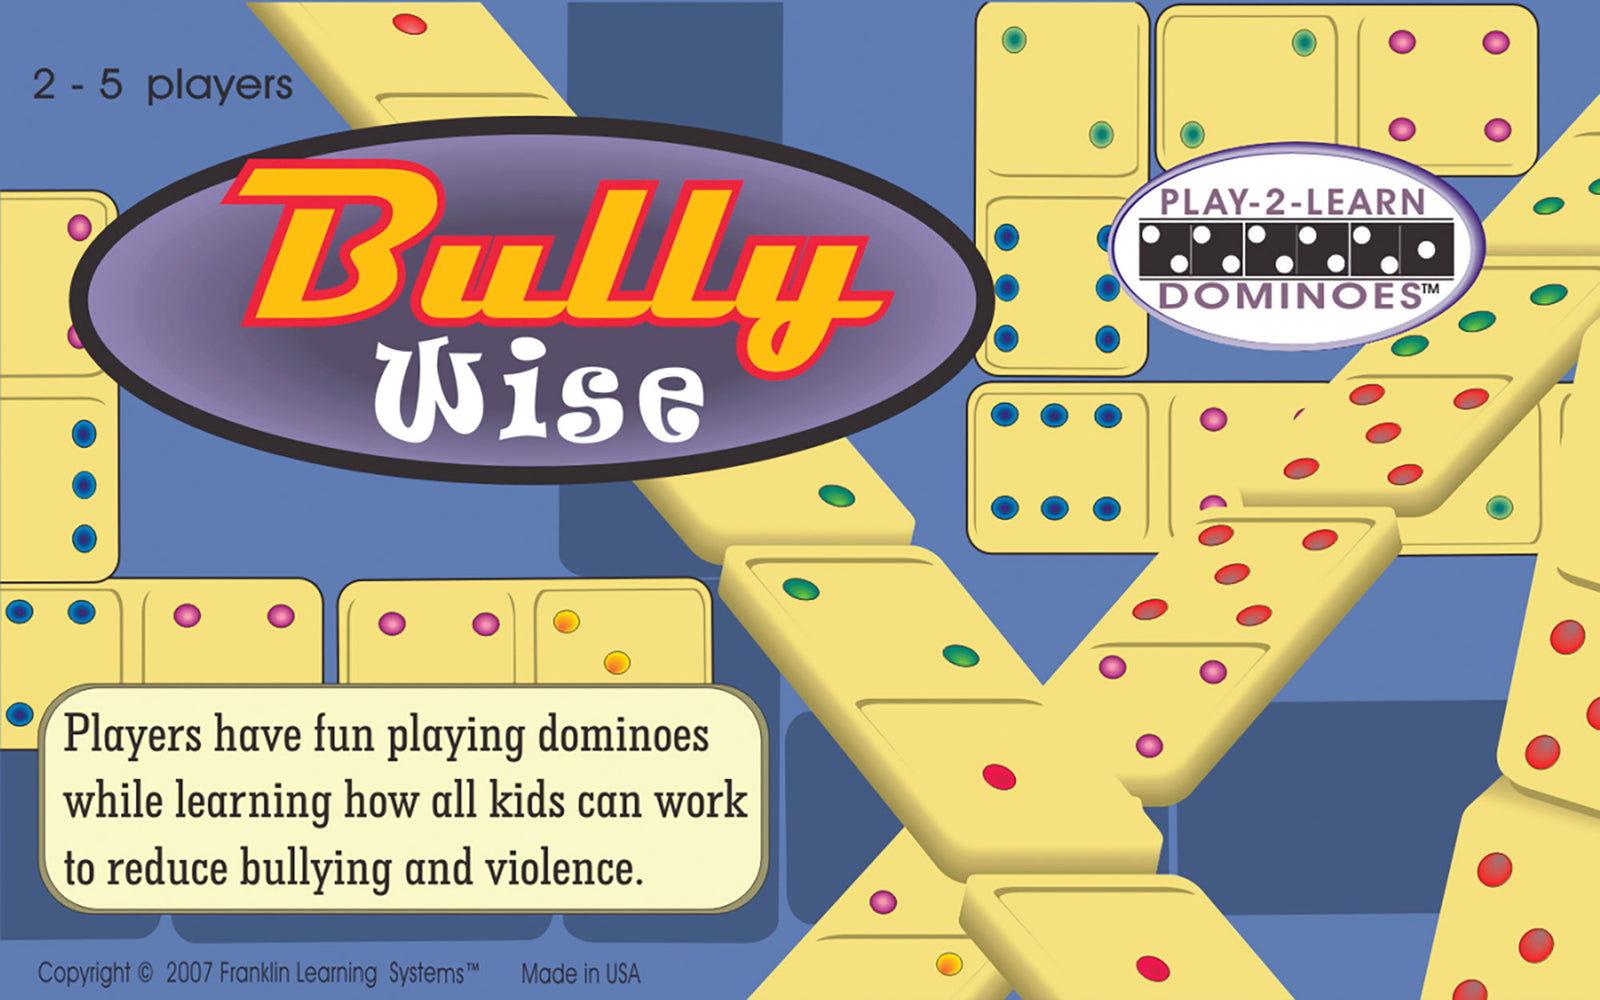 Bully Wise: jugar-2-aprender dominó